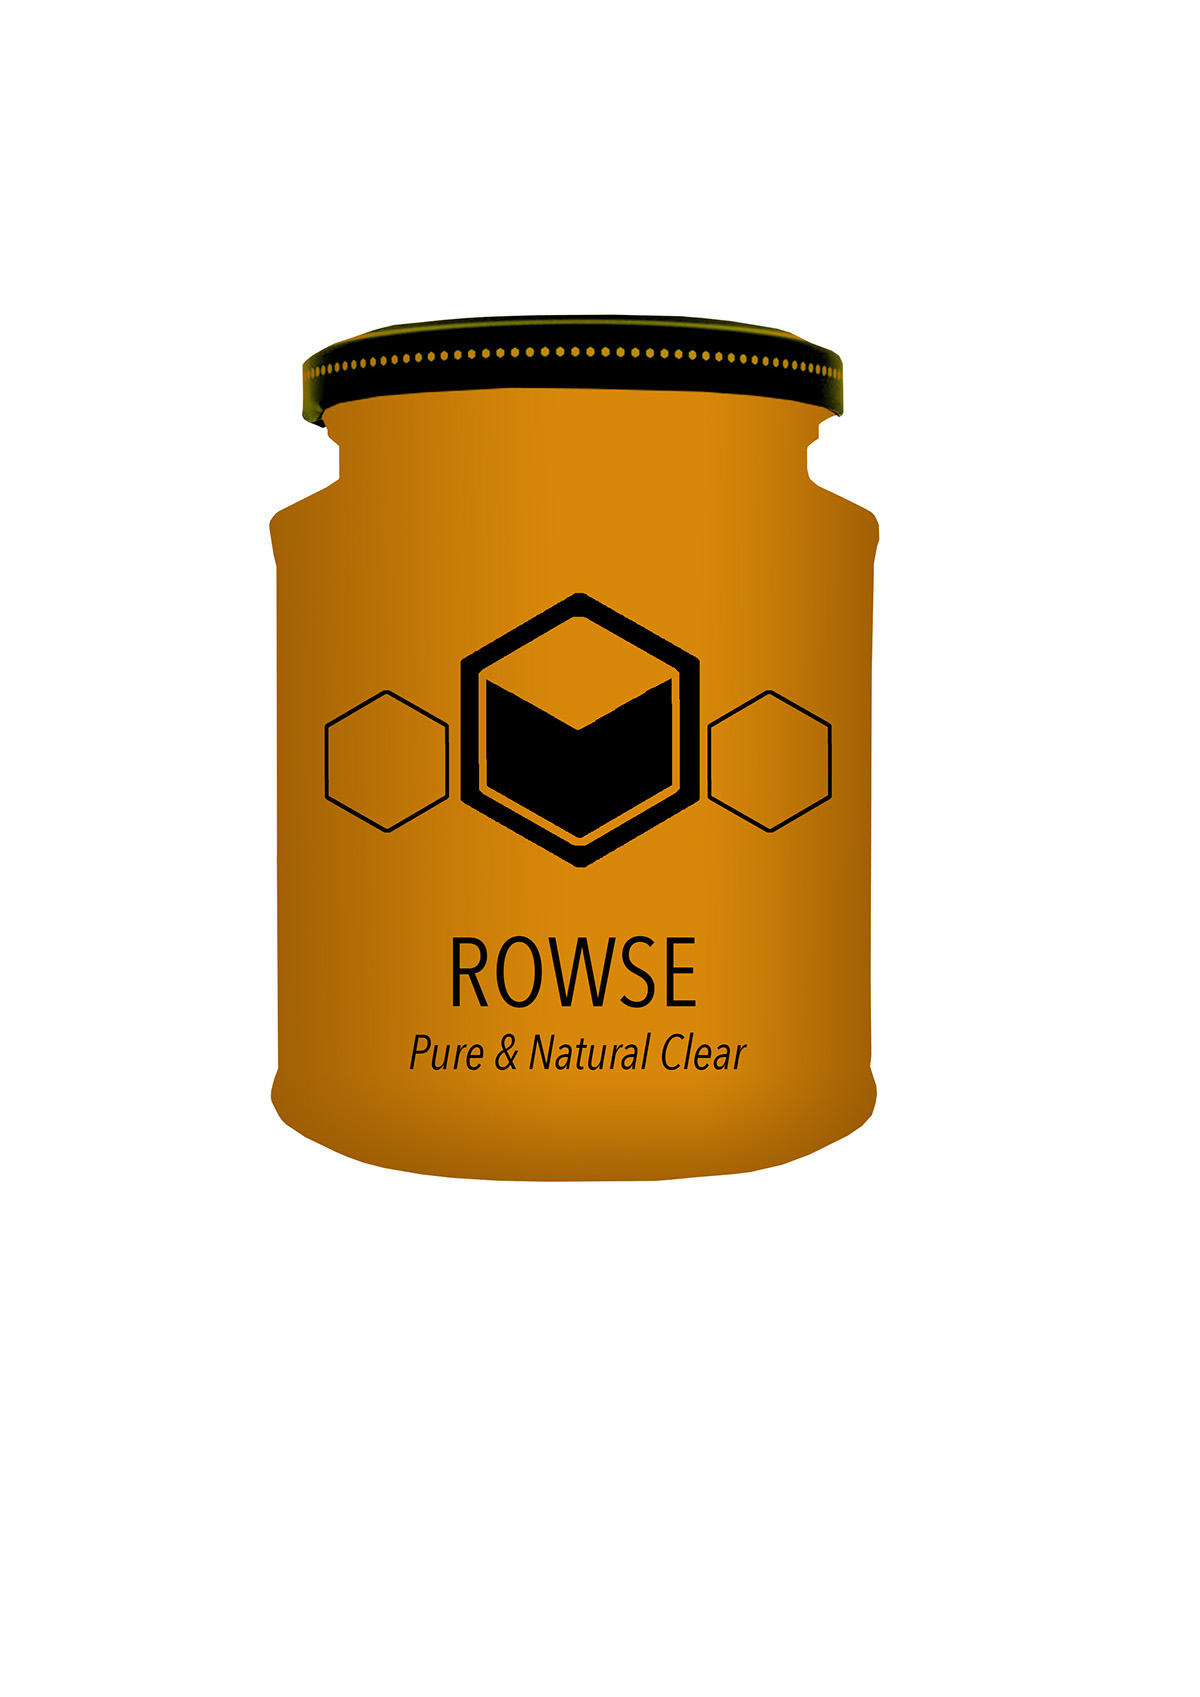 honey Rowse Label honeycomb hexagon bees Nature natural shapes logo